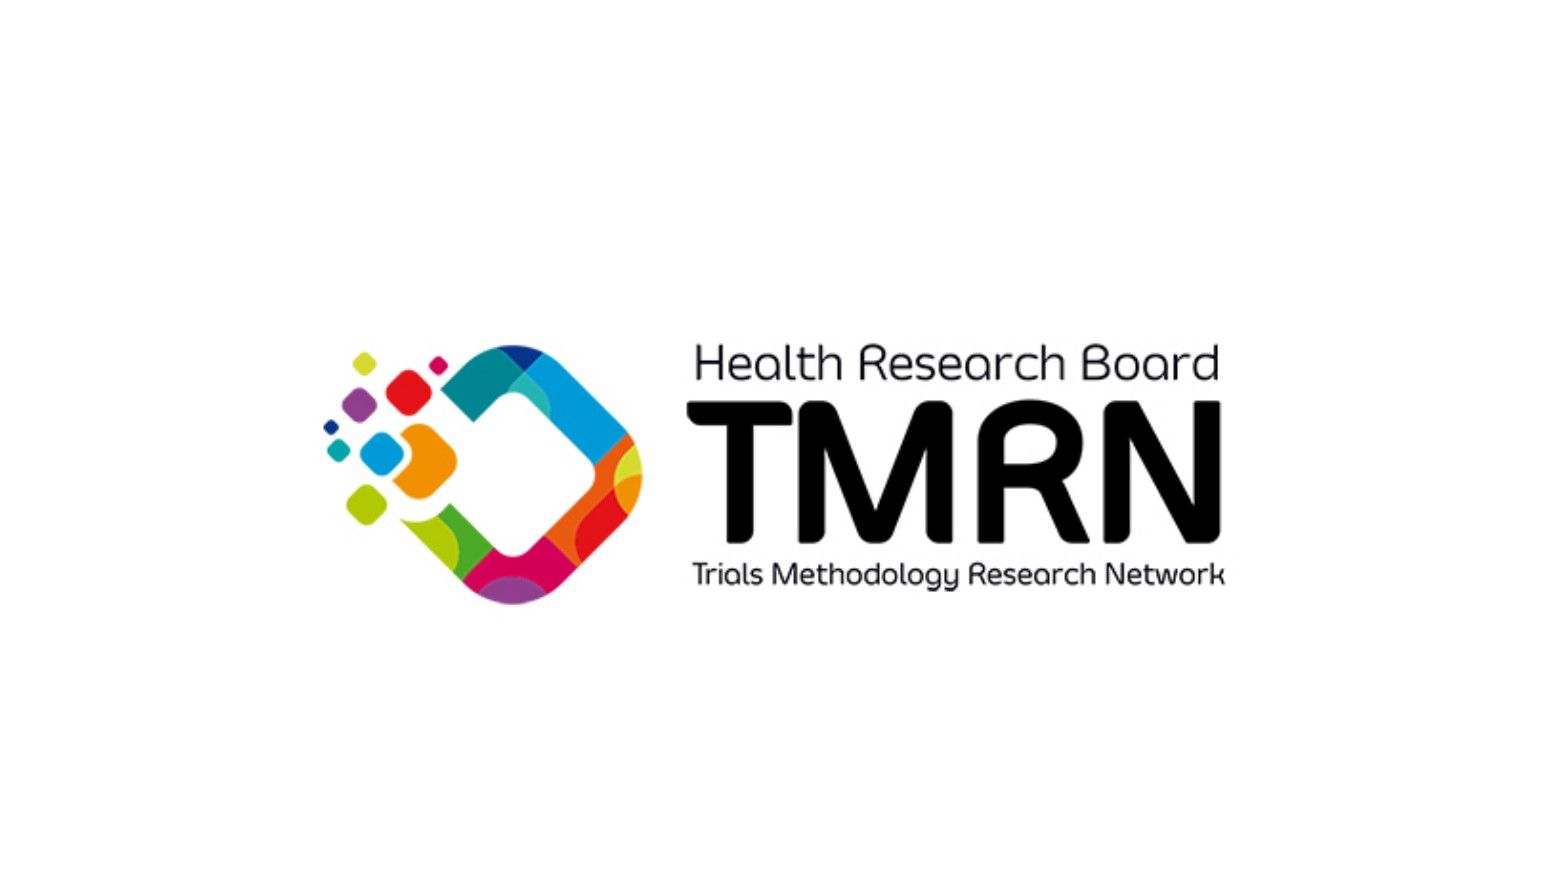 Health Research Board TMRN logo